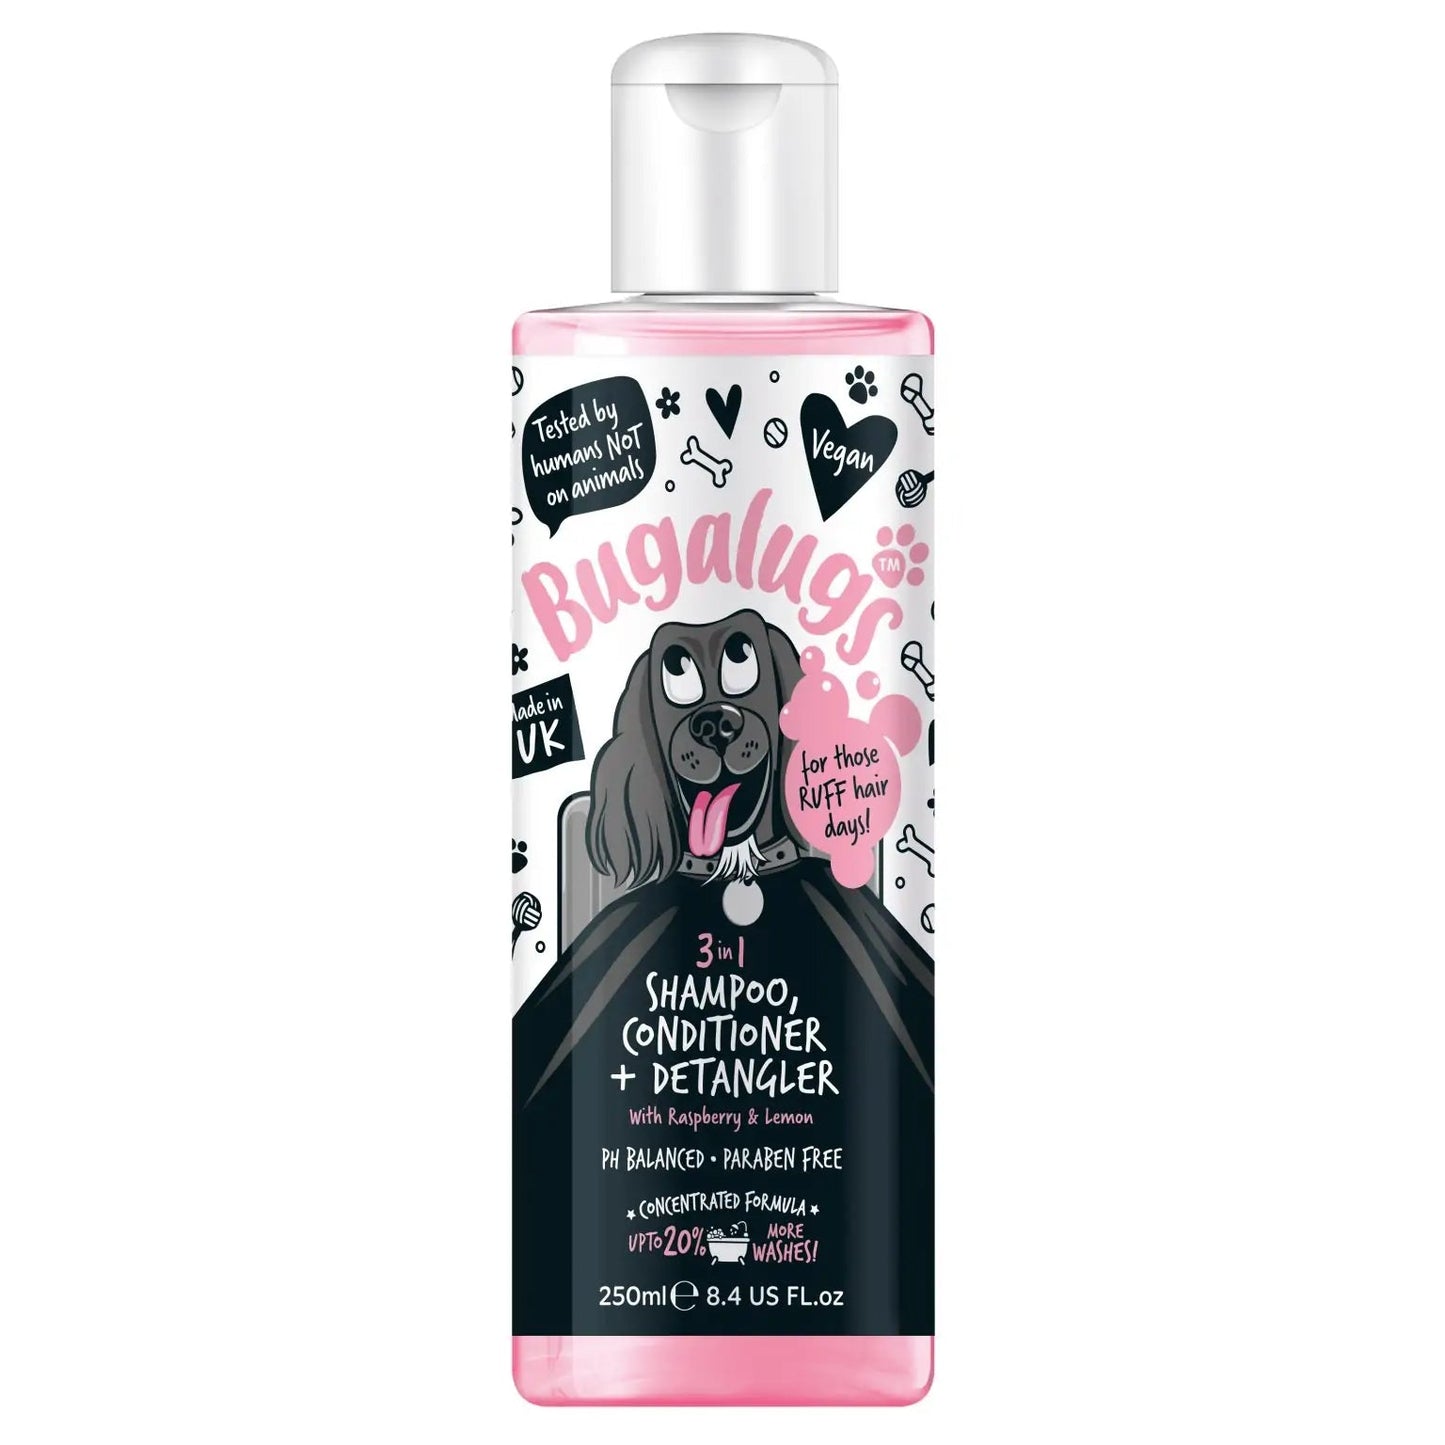 Bugalugs 3 in 1 Shampoo, Conditioner + Detangler - Natural Doggy Treats